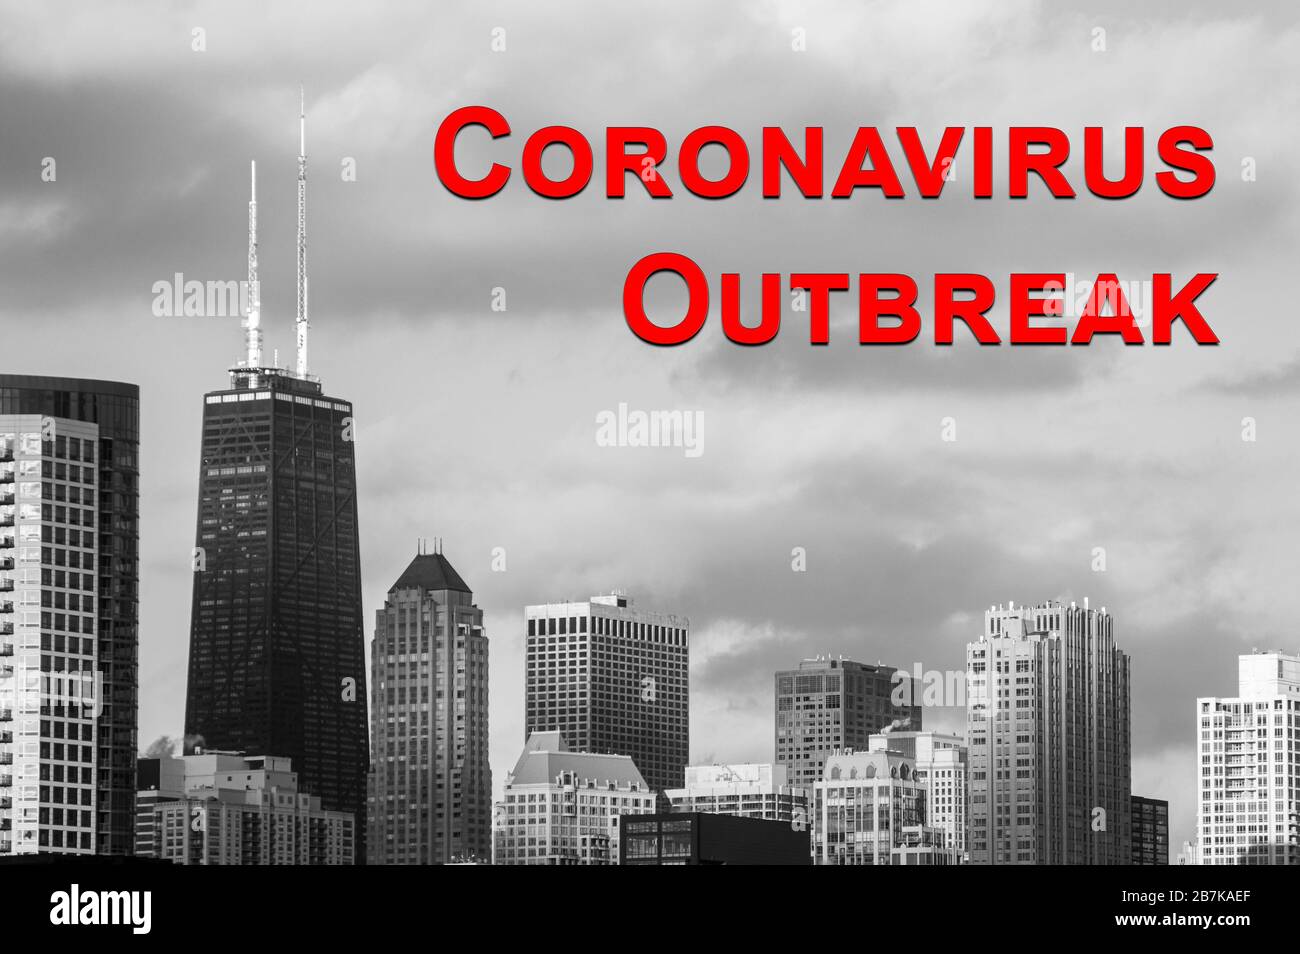 Coronavirus Outbreak in Chicago, Illinois. Cityscape with red text 'CORONAVIRUS COUTBREAK'. Stock Photo